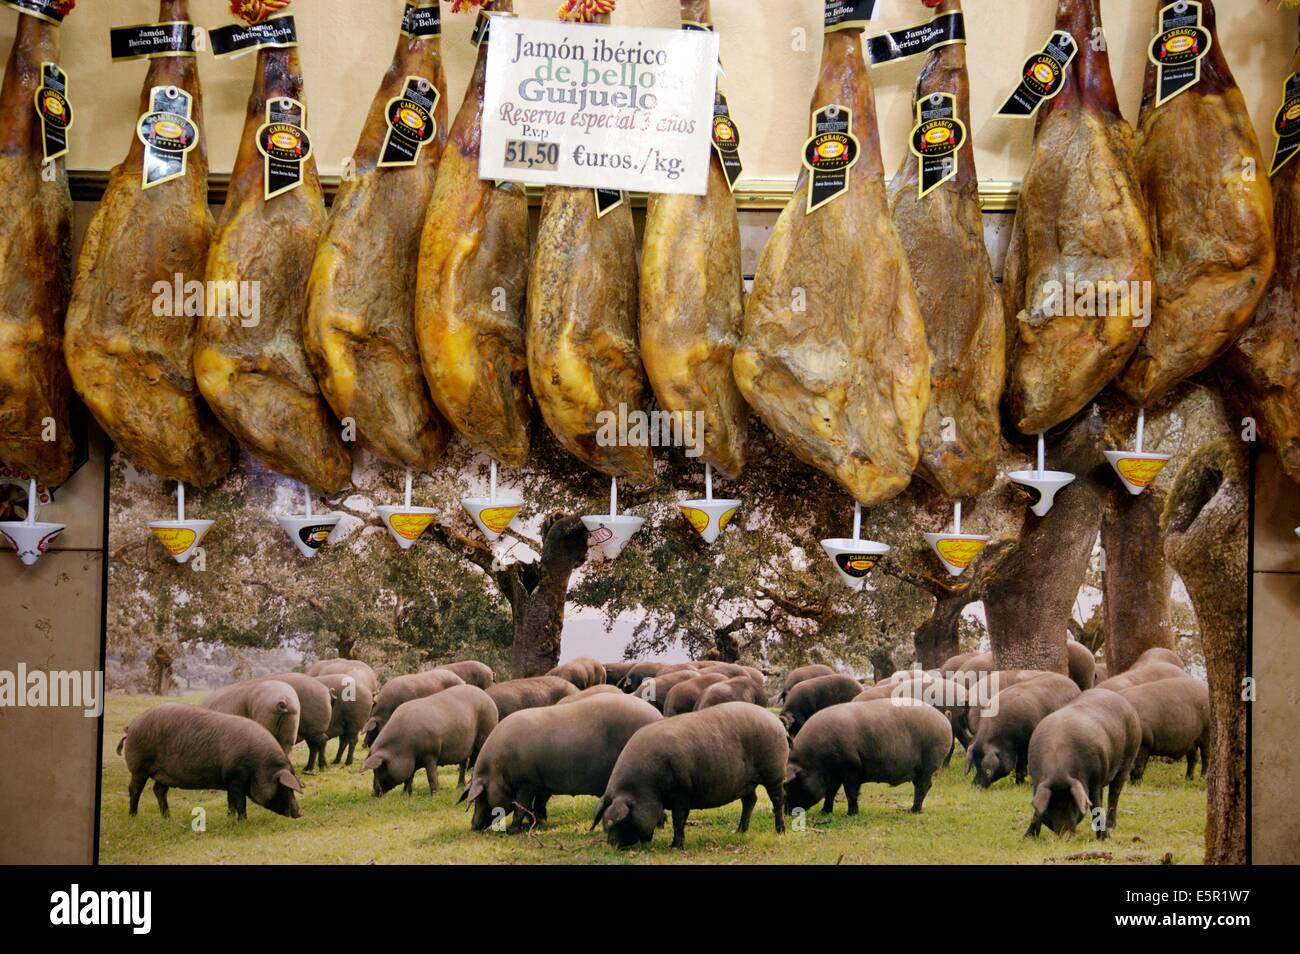 Spanish hams from Pata negra pigs Stock Photo - Alamy